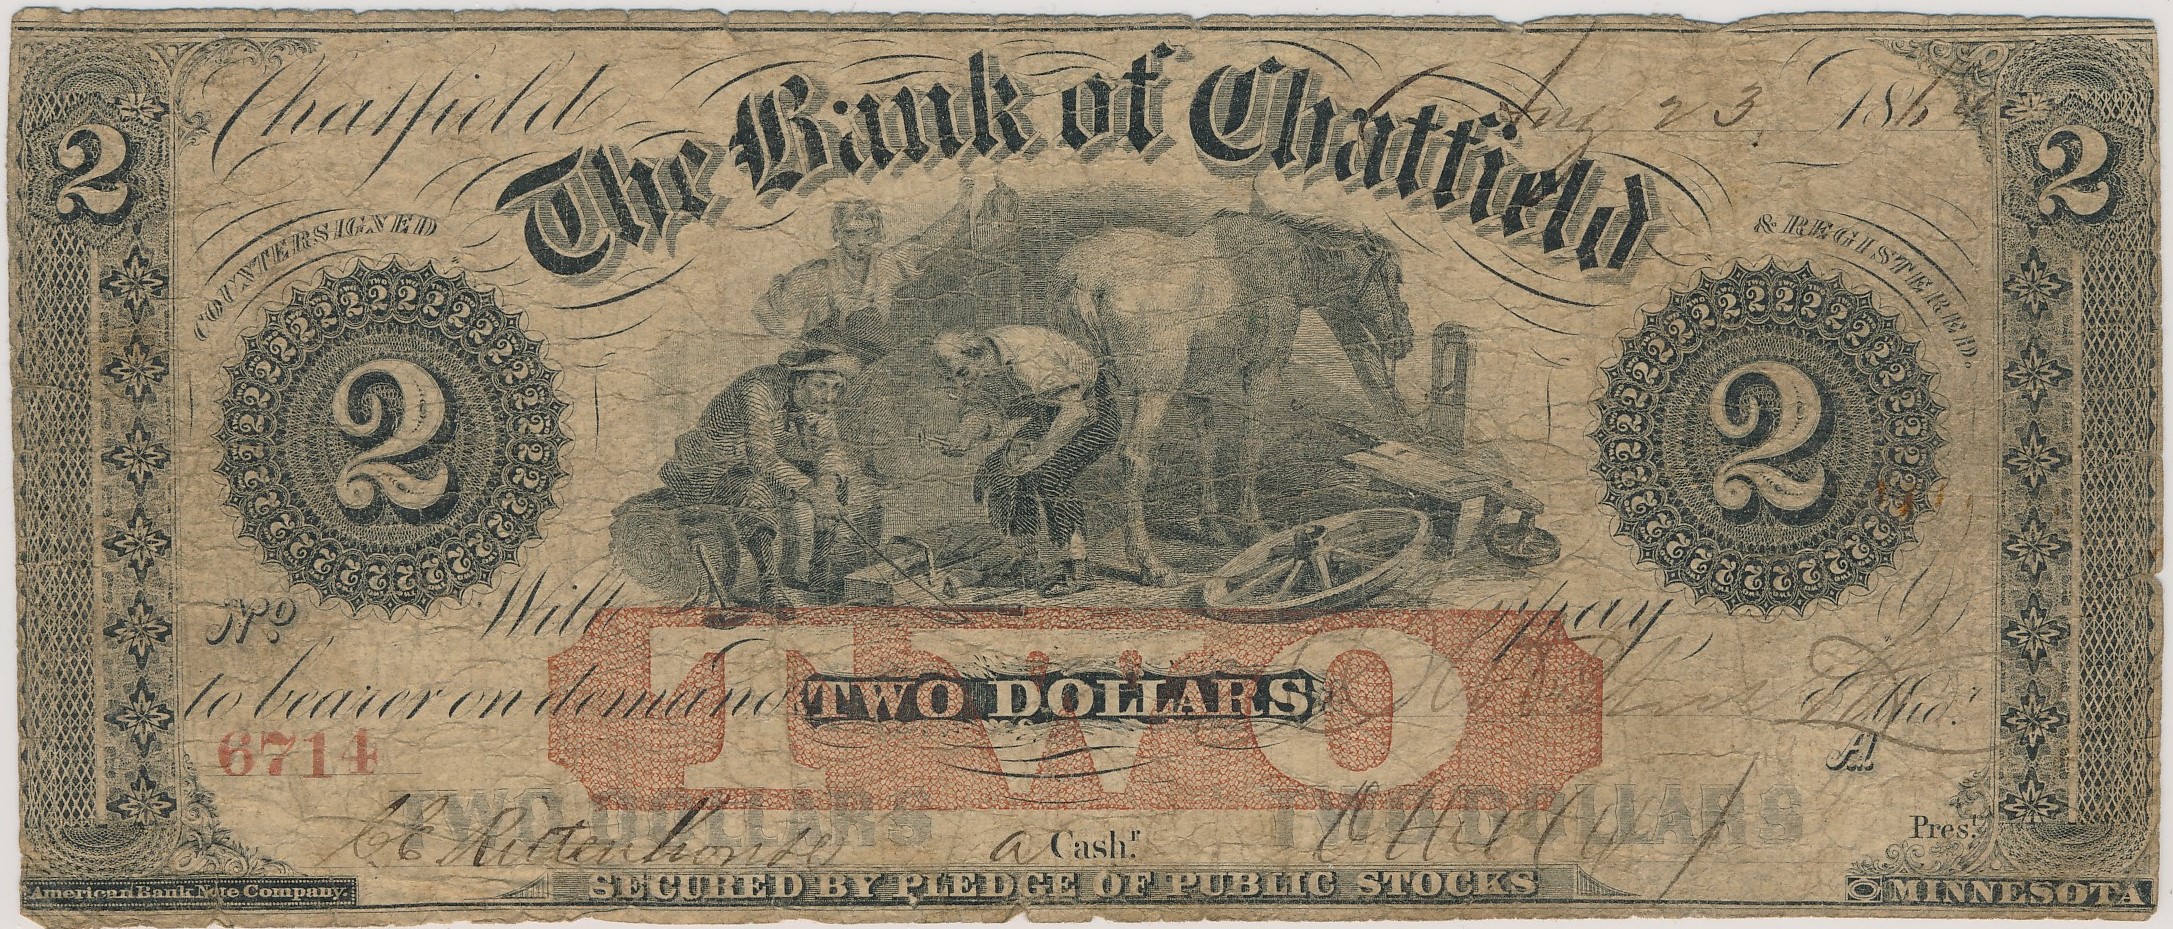 $2 Bank of Chatfield